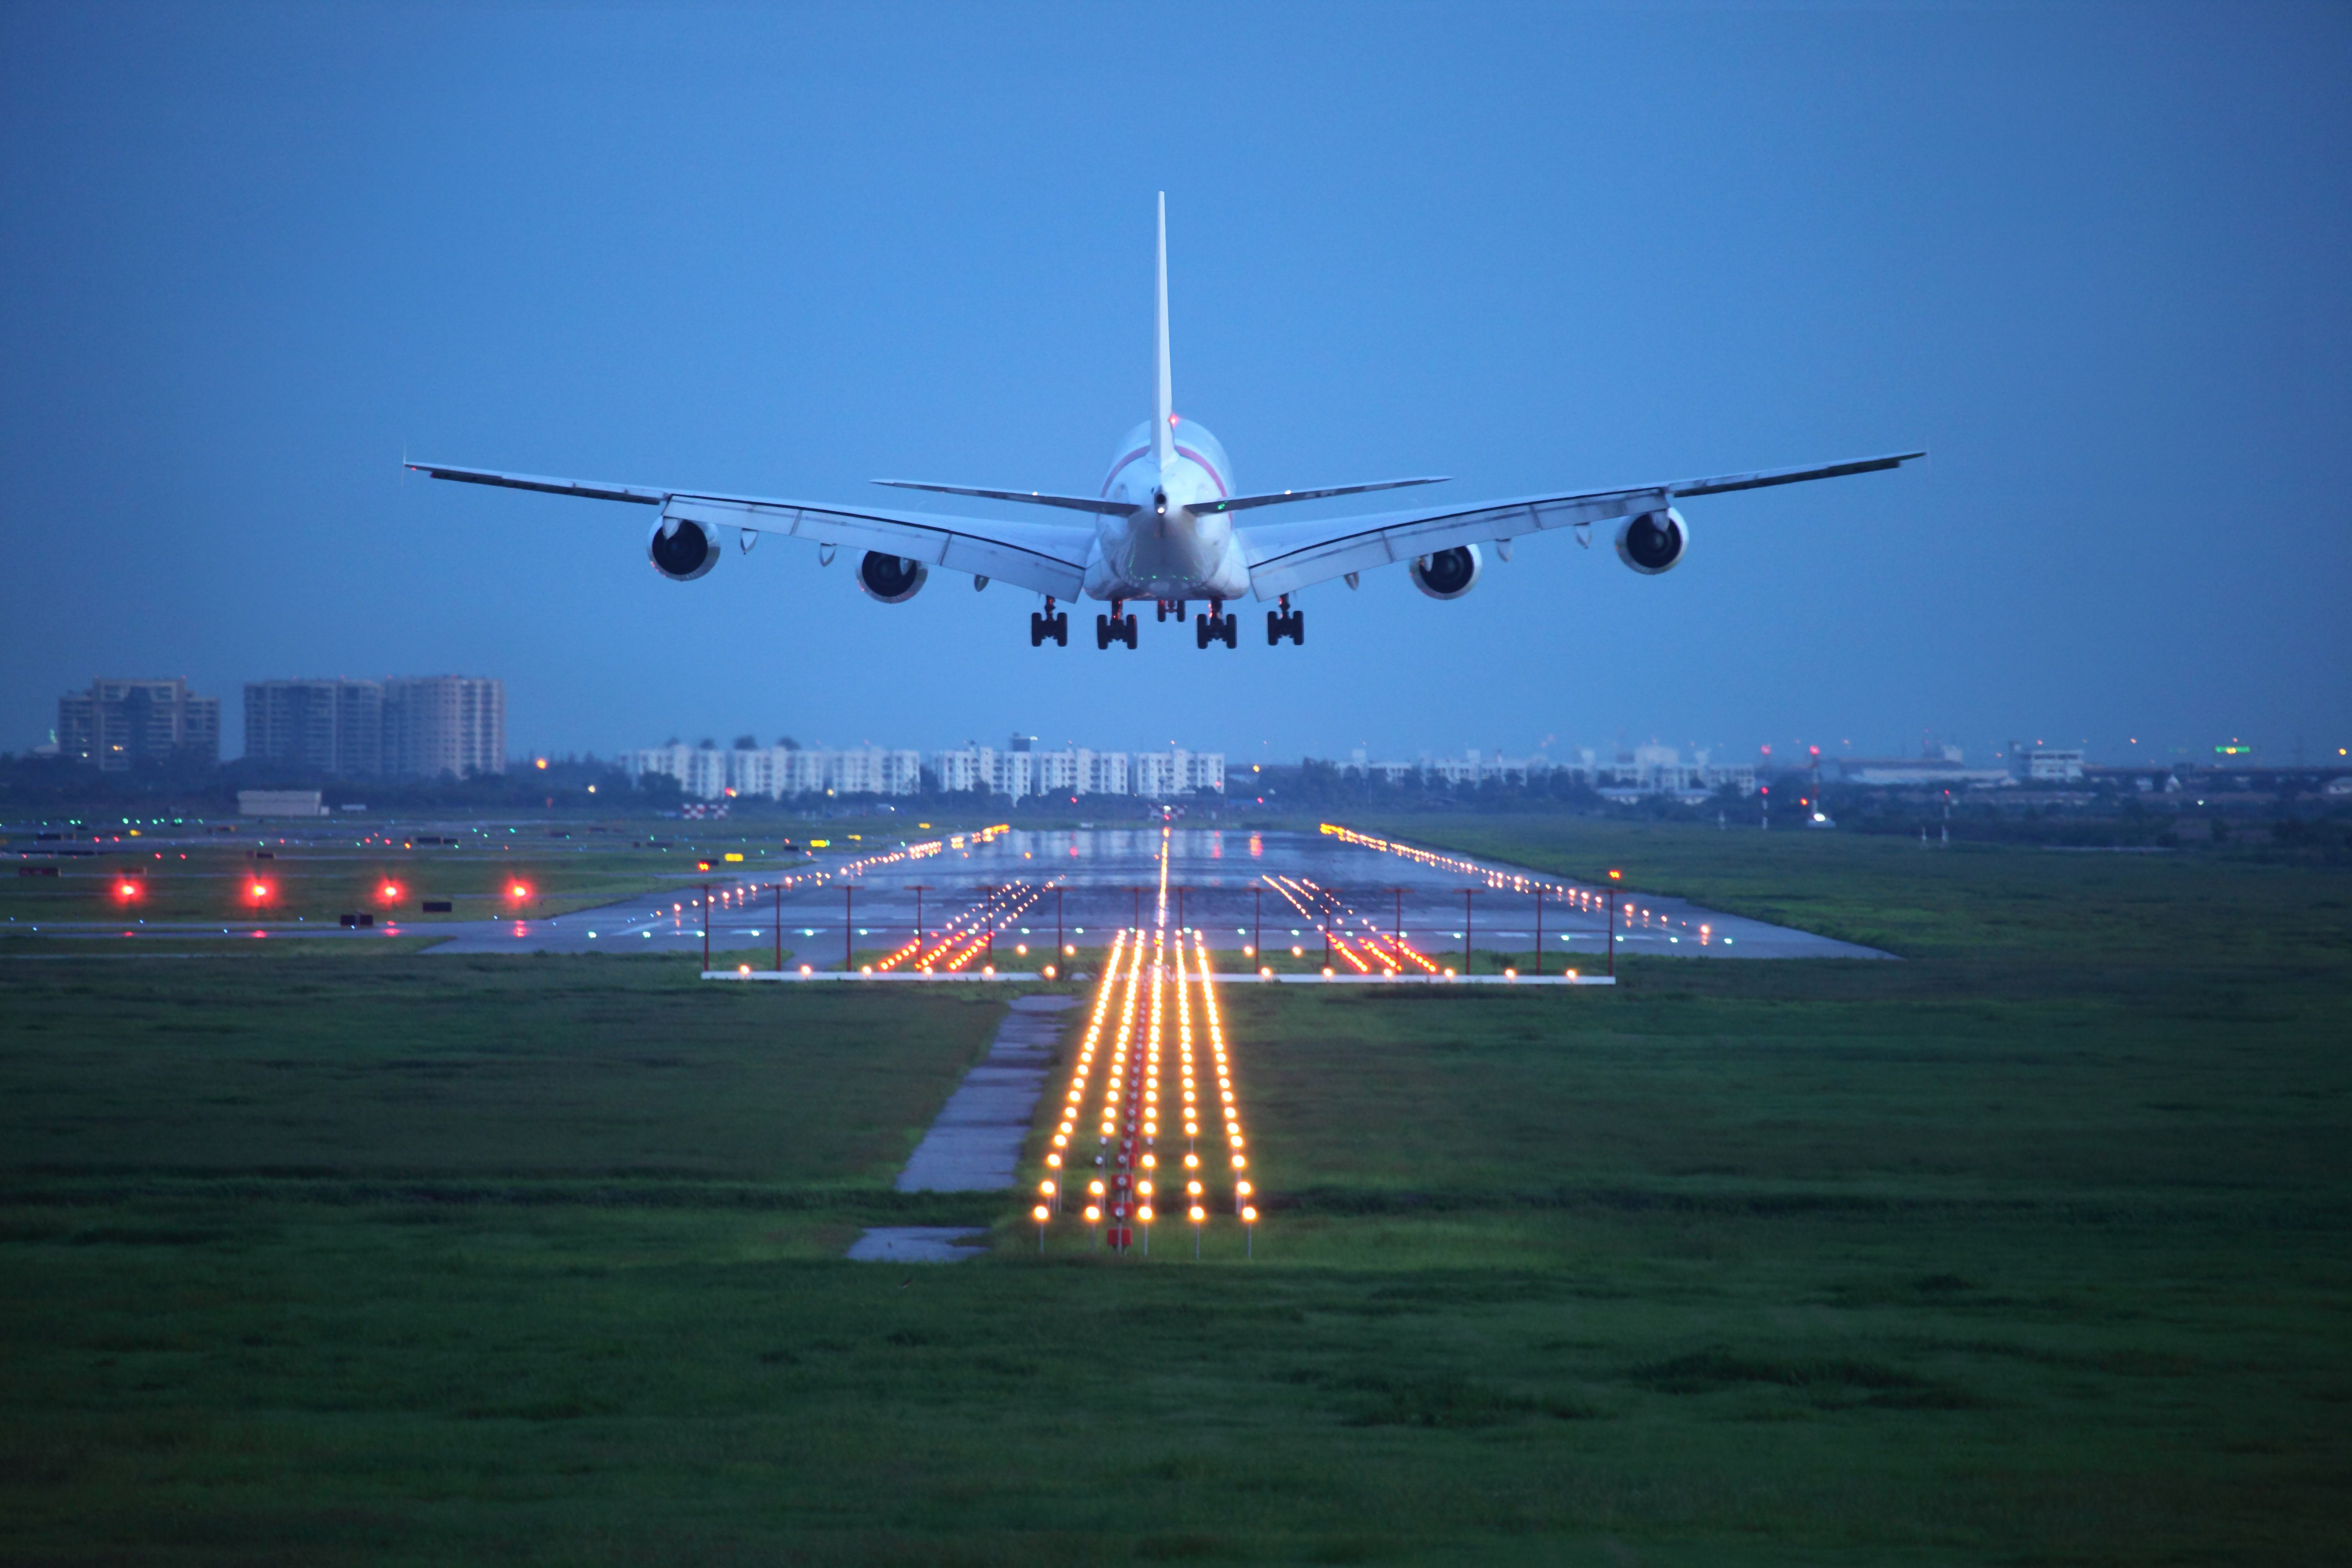 Quadjet landing on runway at dusk